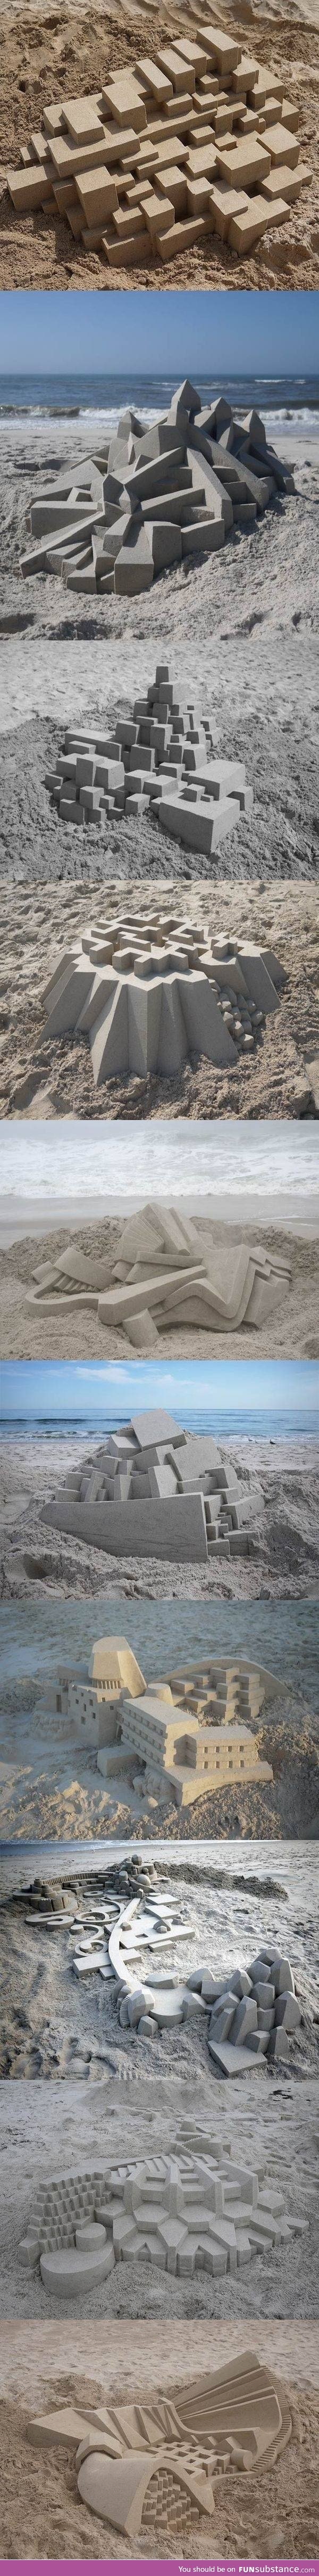 Super controlled sand art